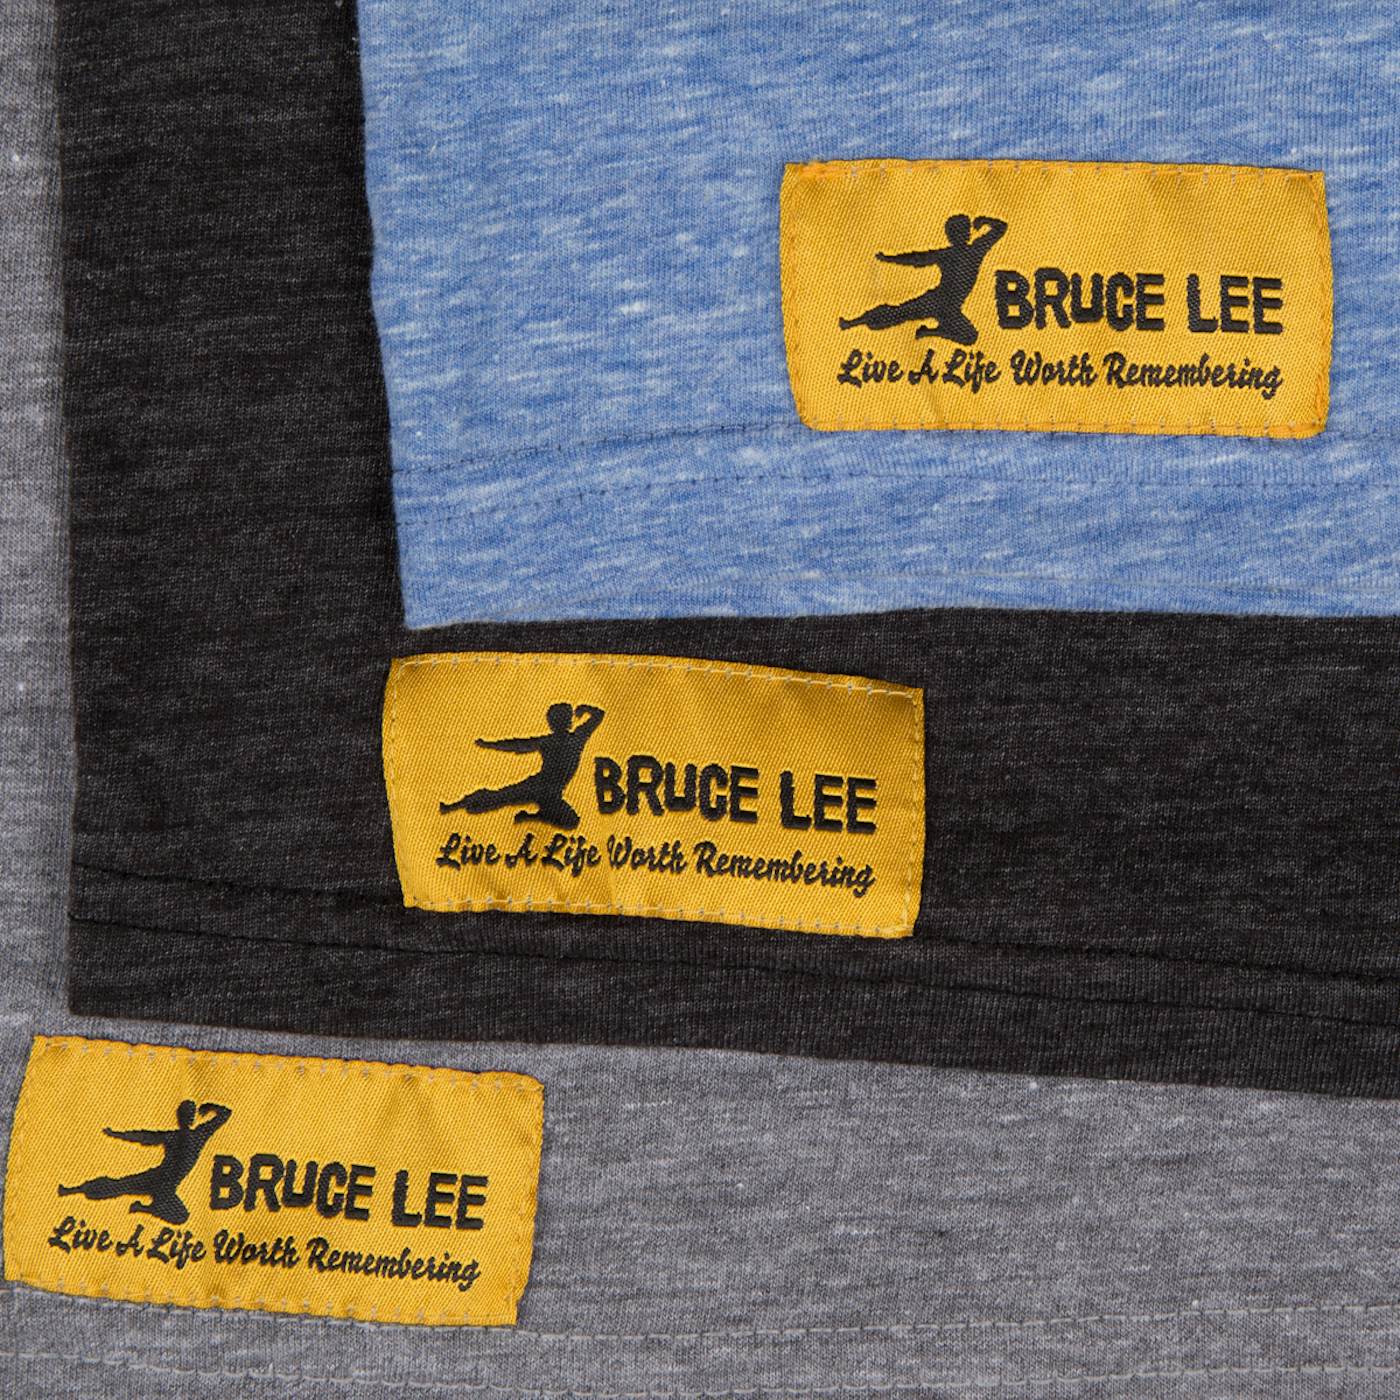 Bruce Lee Jeet Kune Do T-shirt Black LG/BK